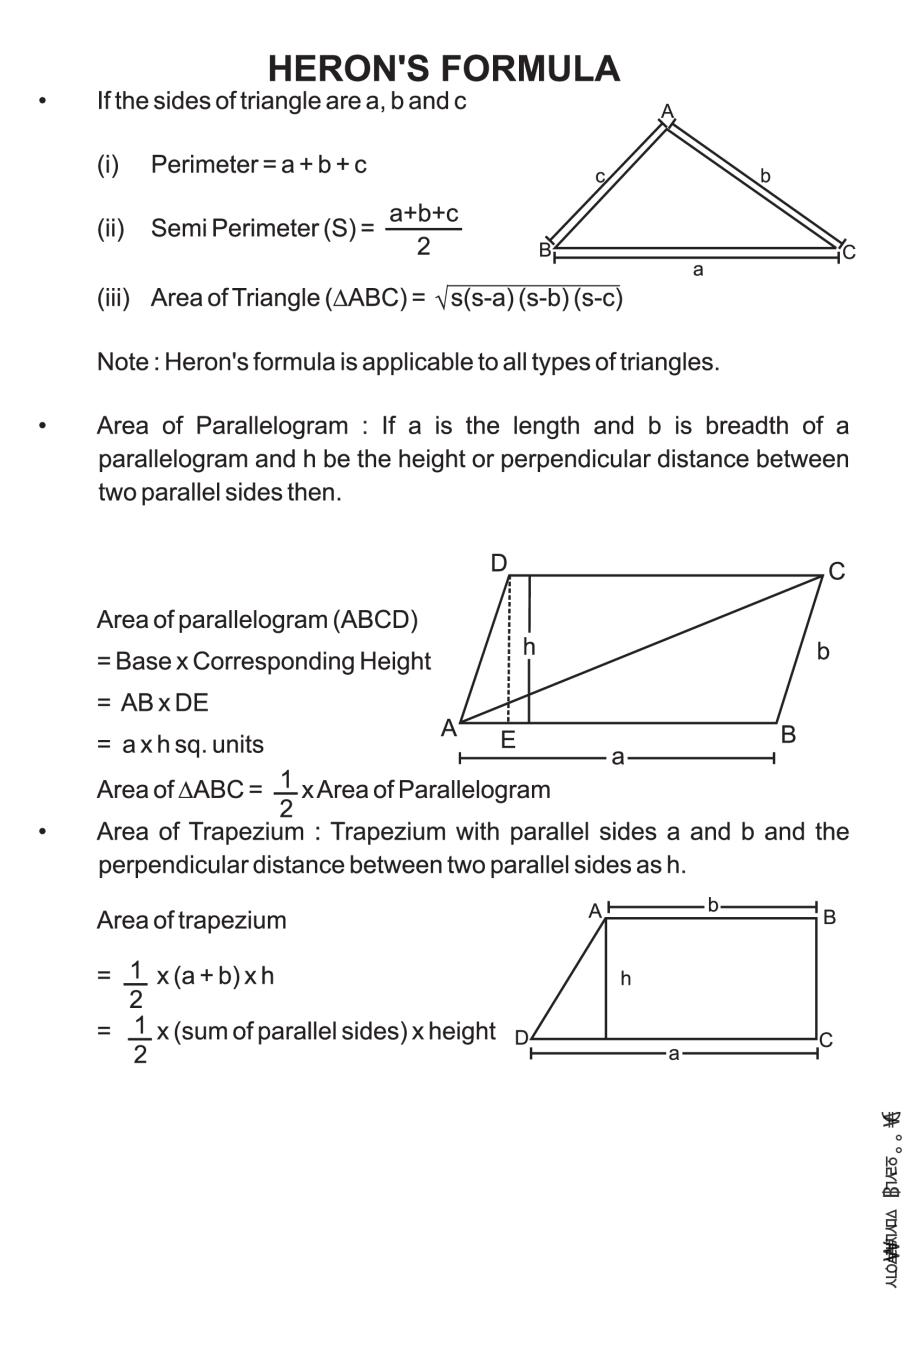 case study questions on heron's formula class 9 pdf